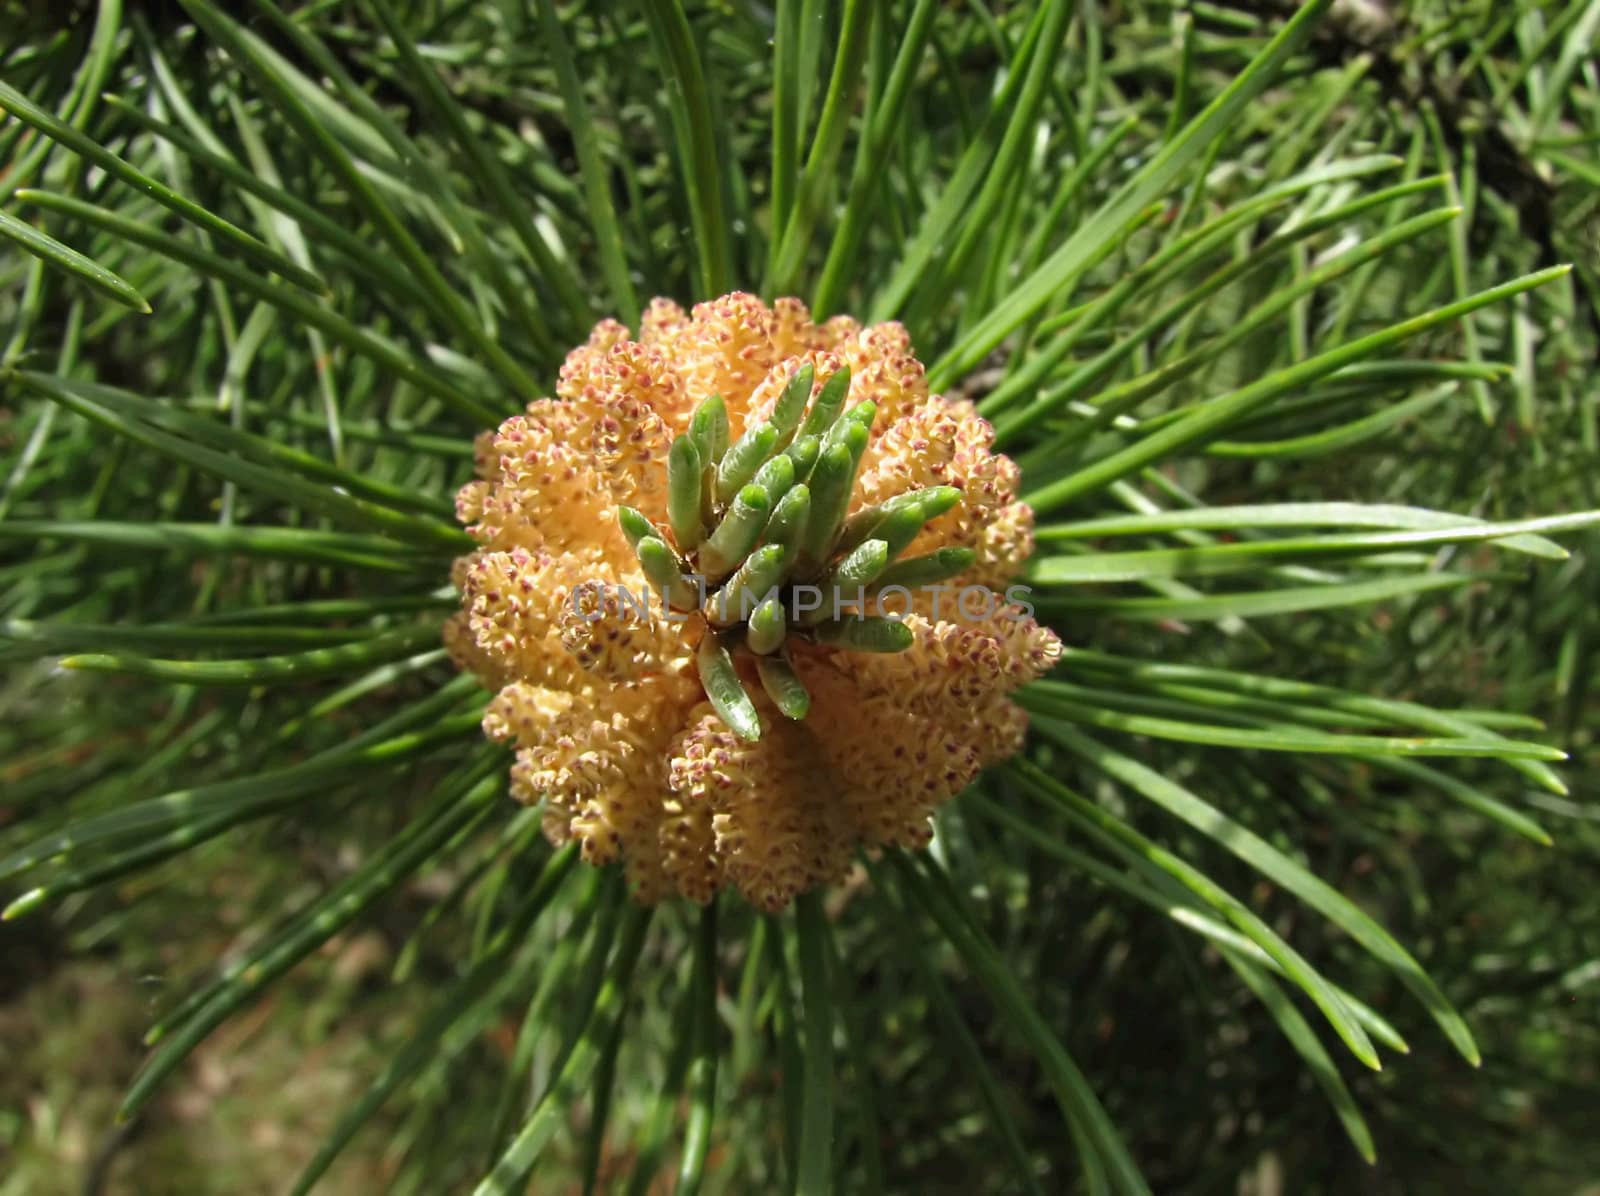 Flowering pine-tree in the springtime